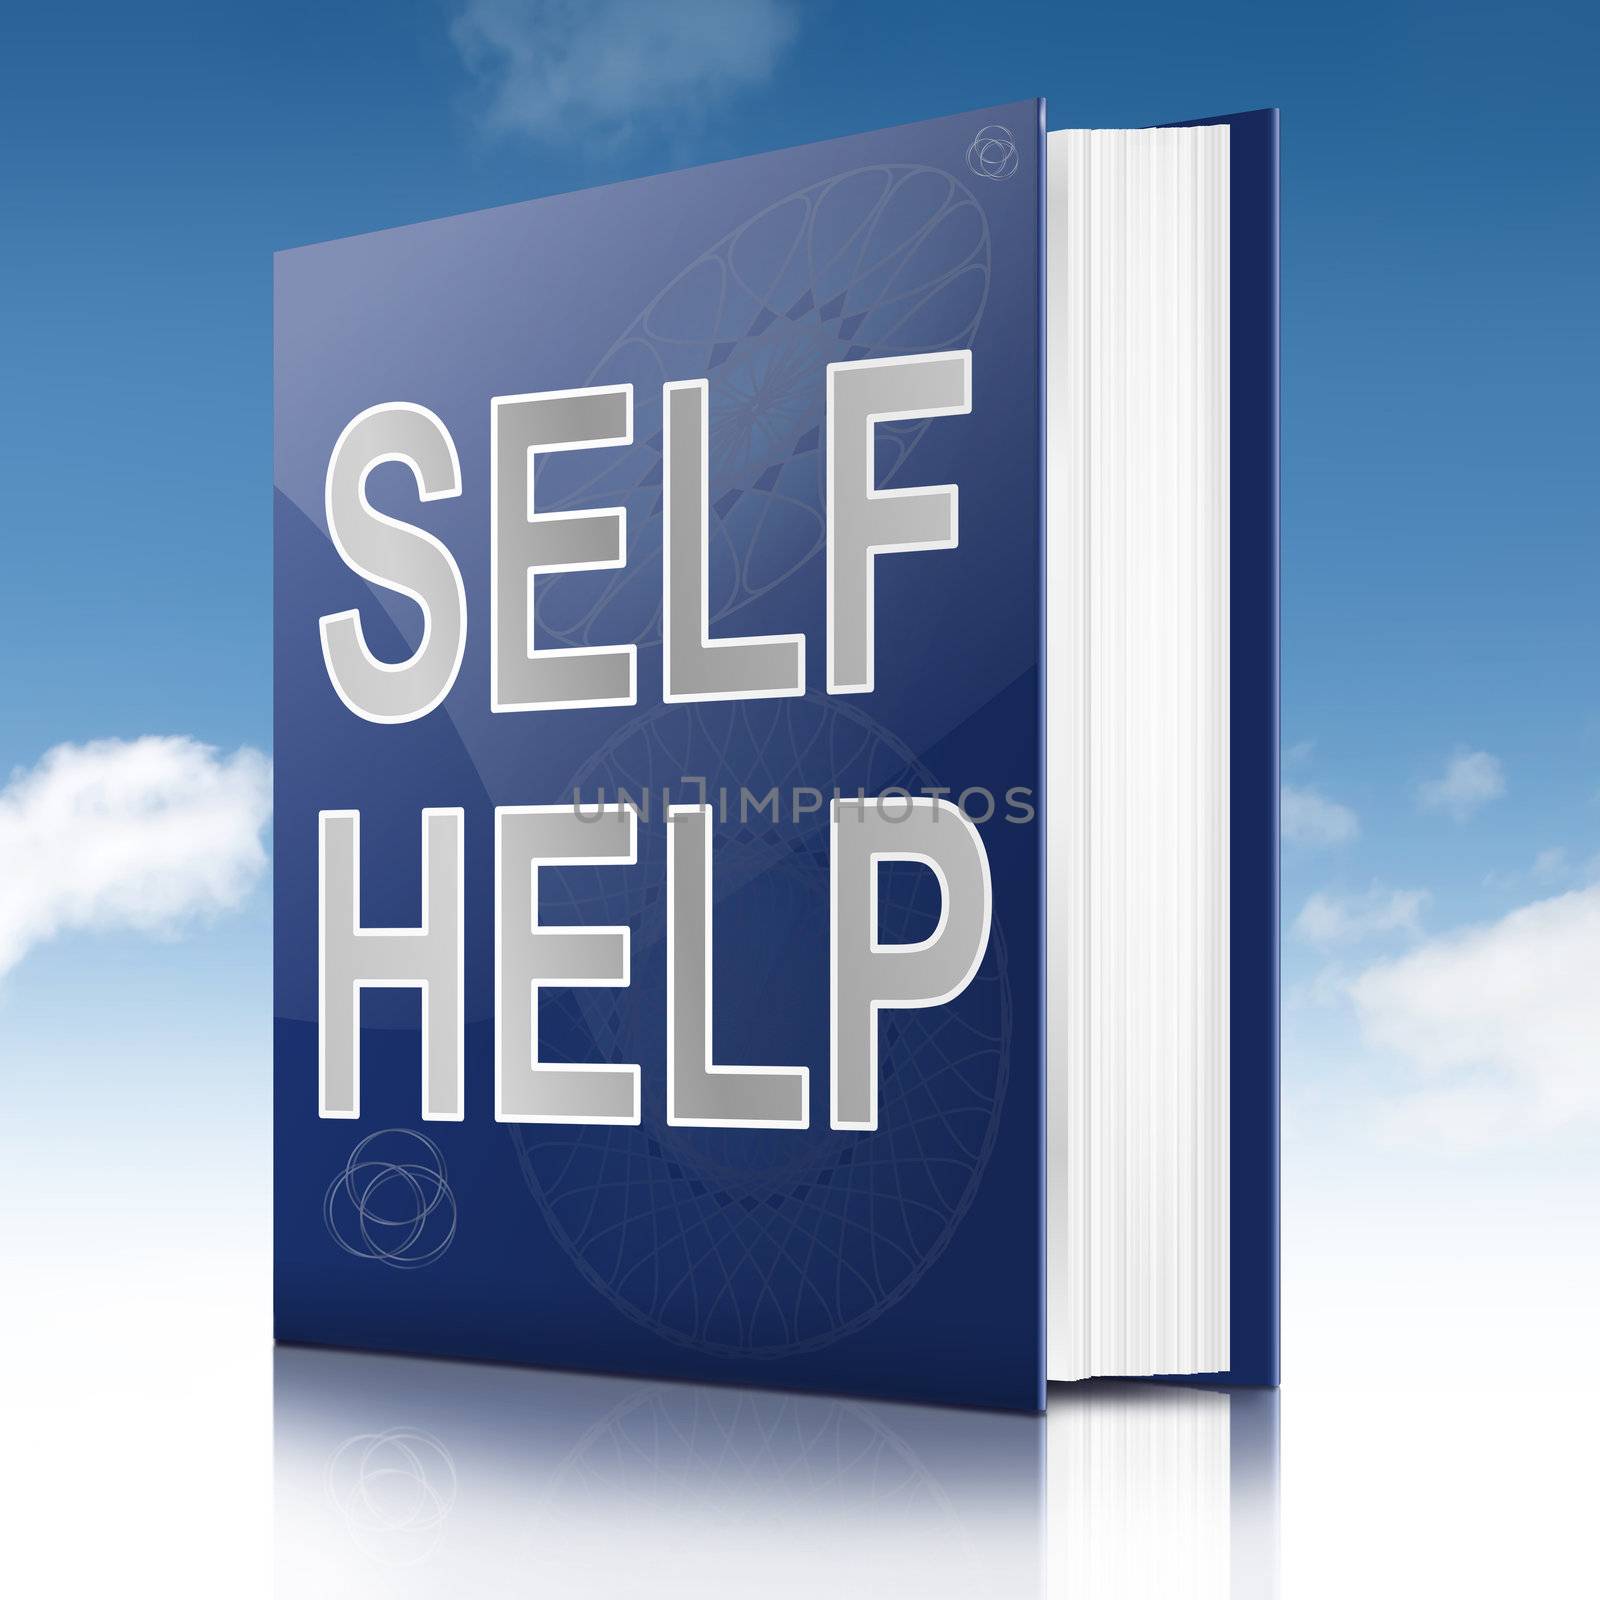 Self help book. by 72soul